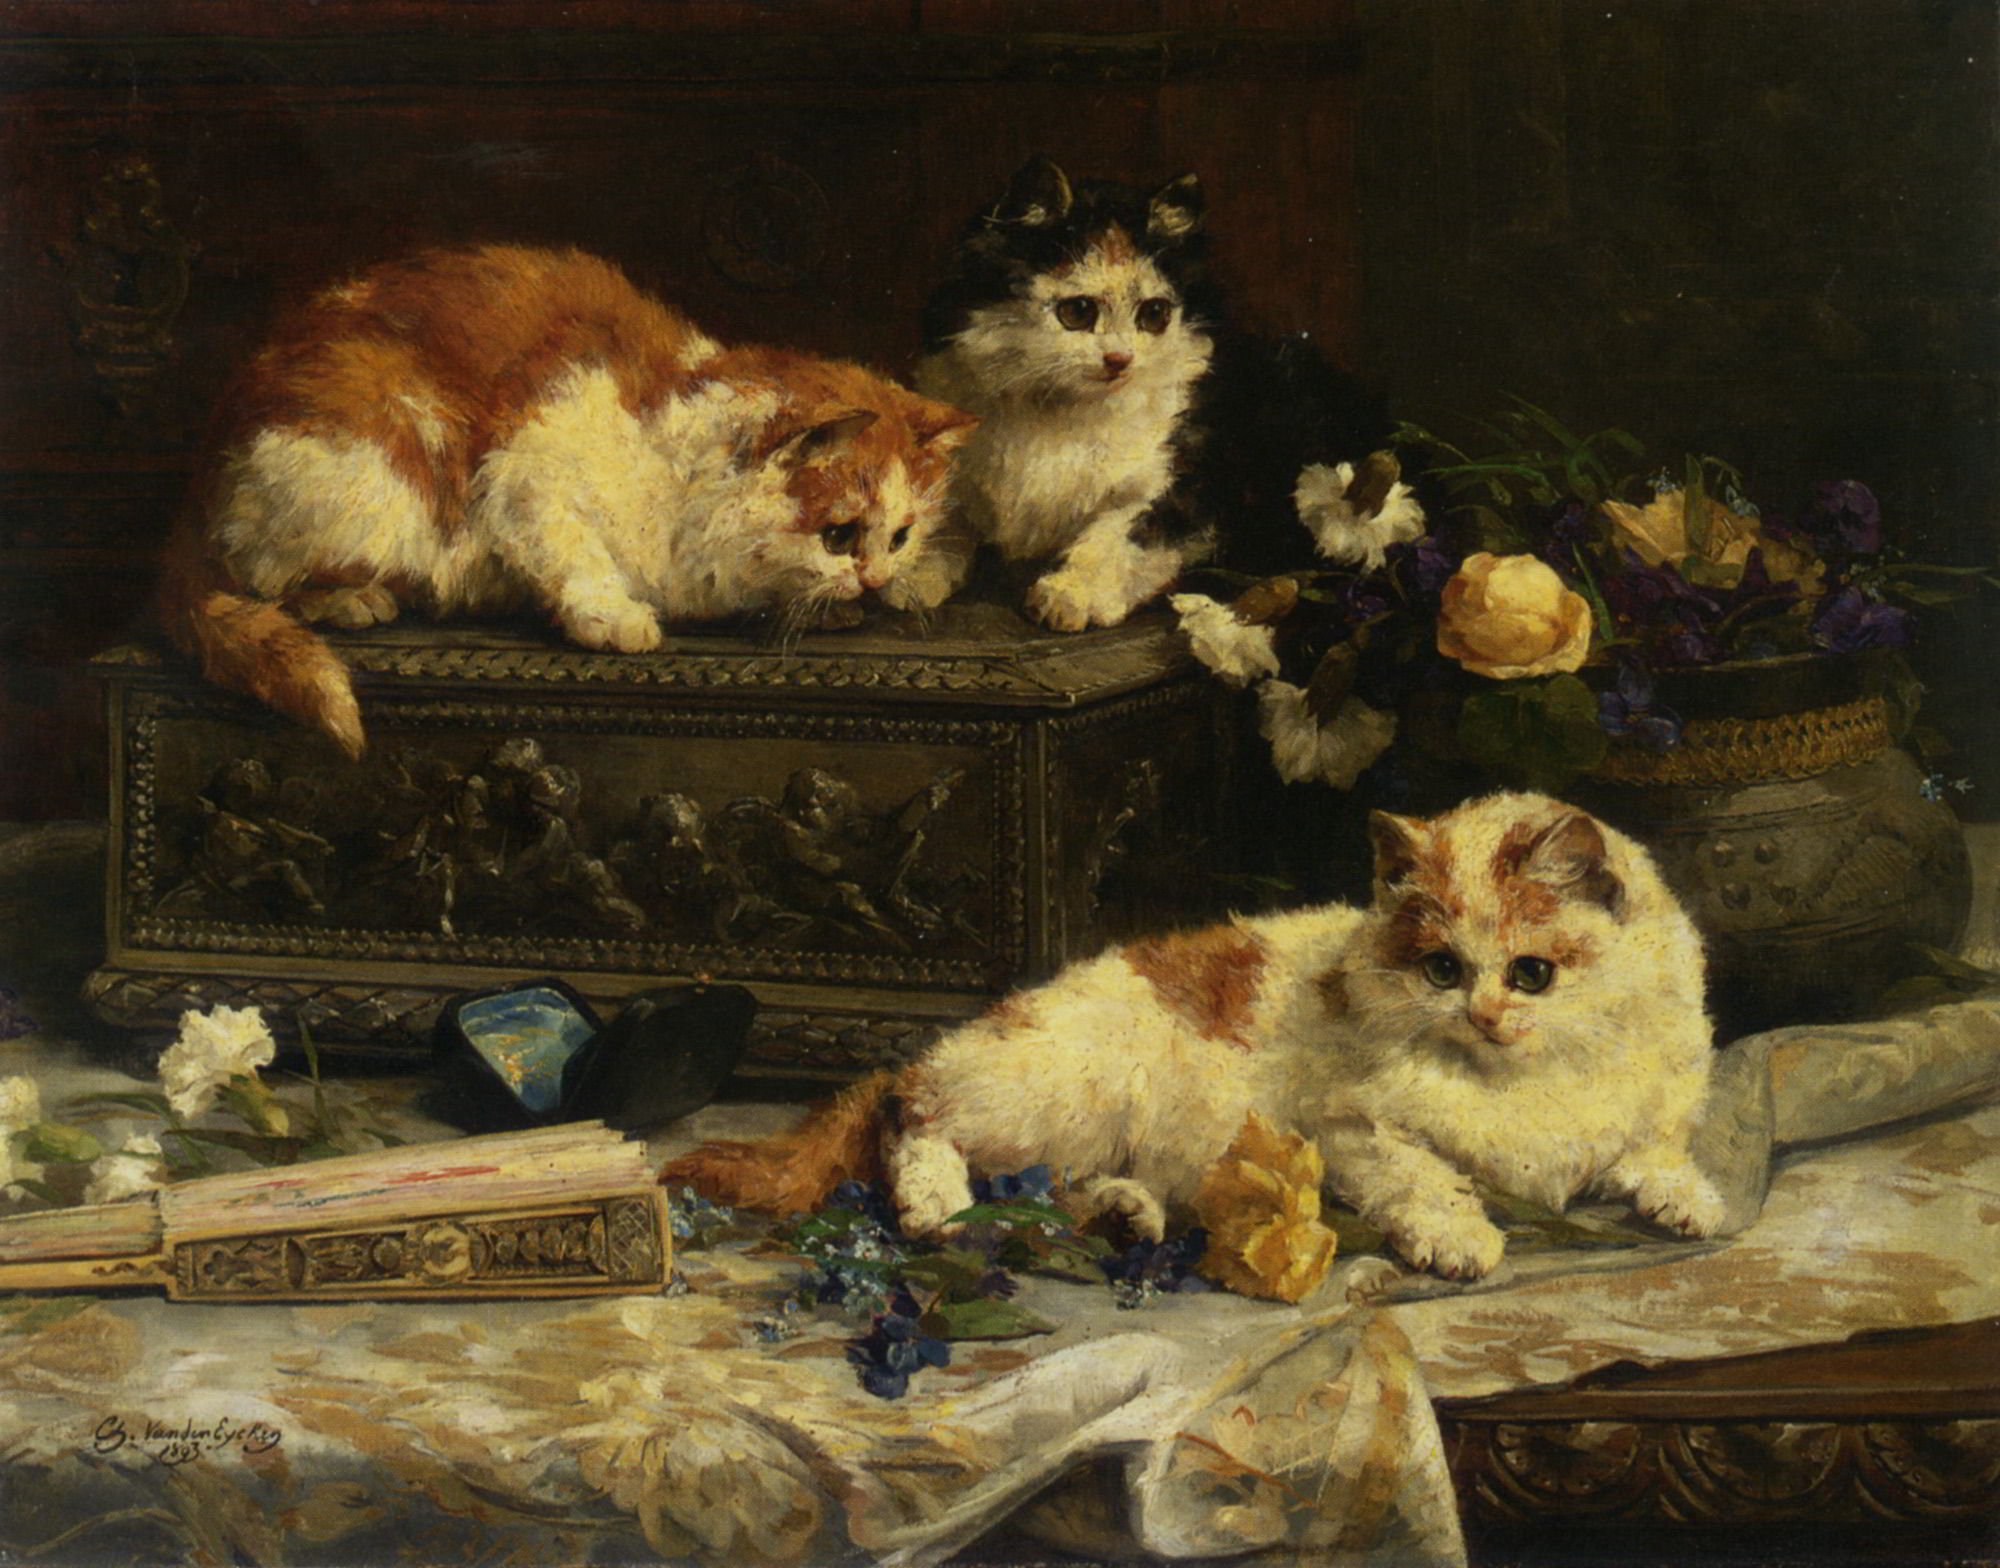 The Three Kittens by Charles van den Eycken